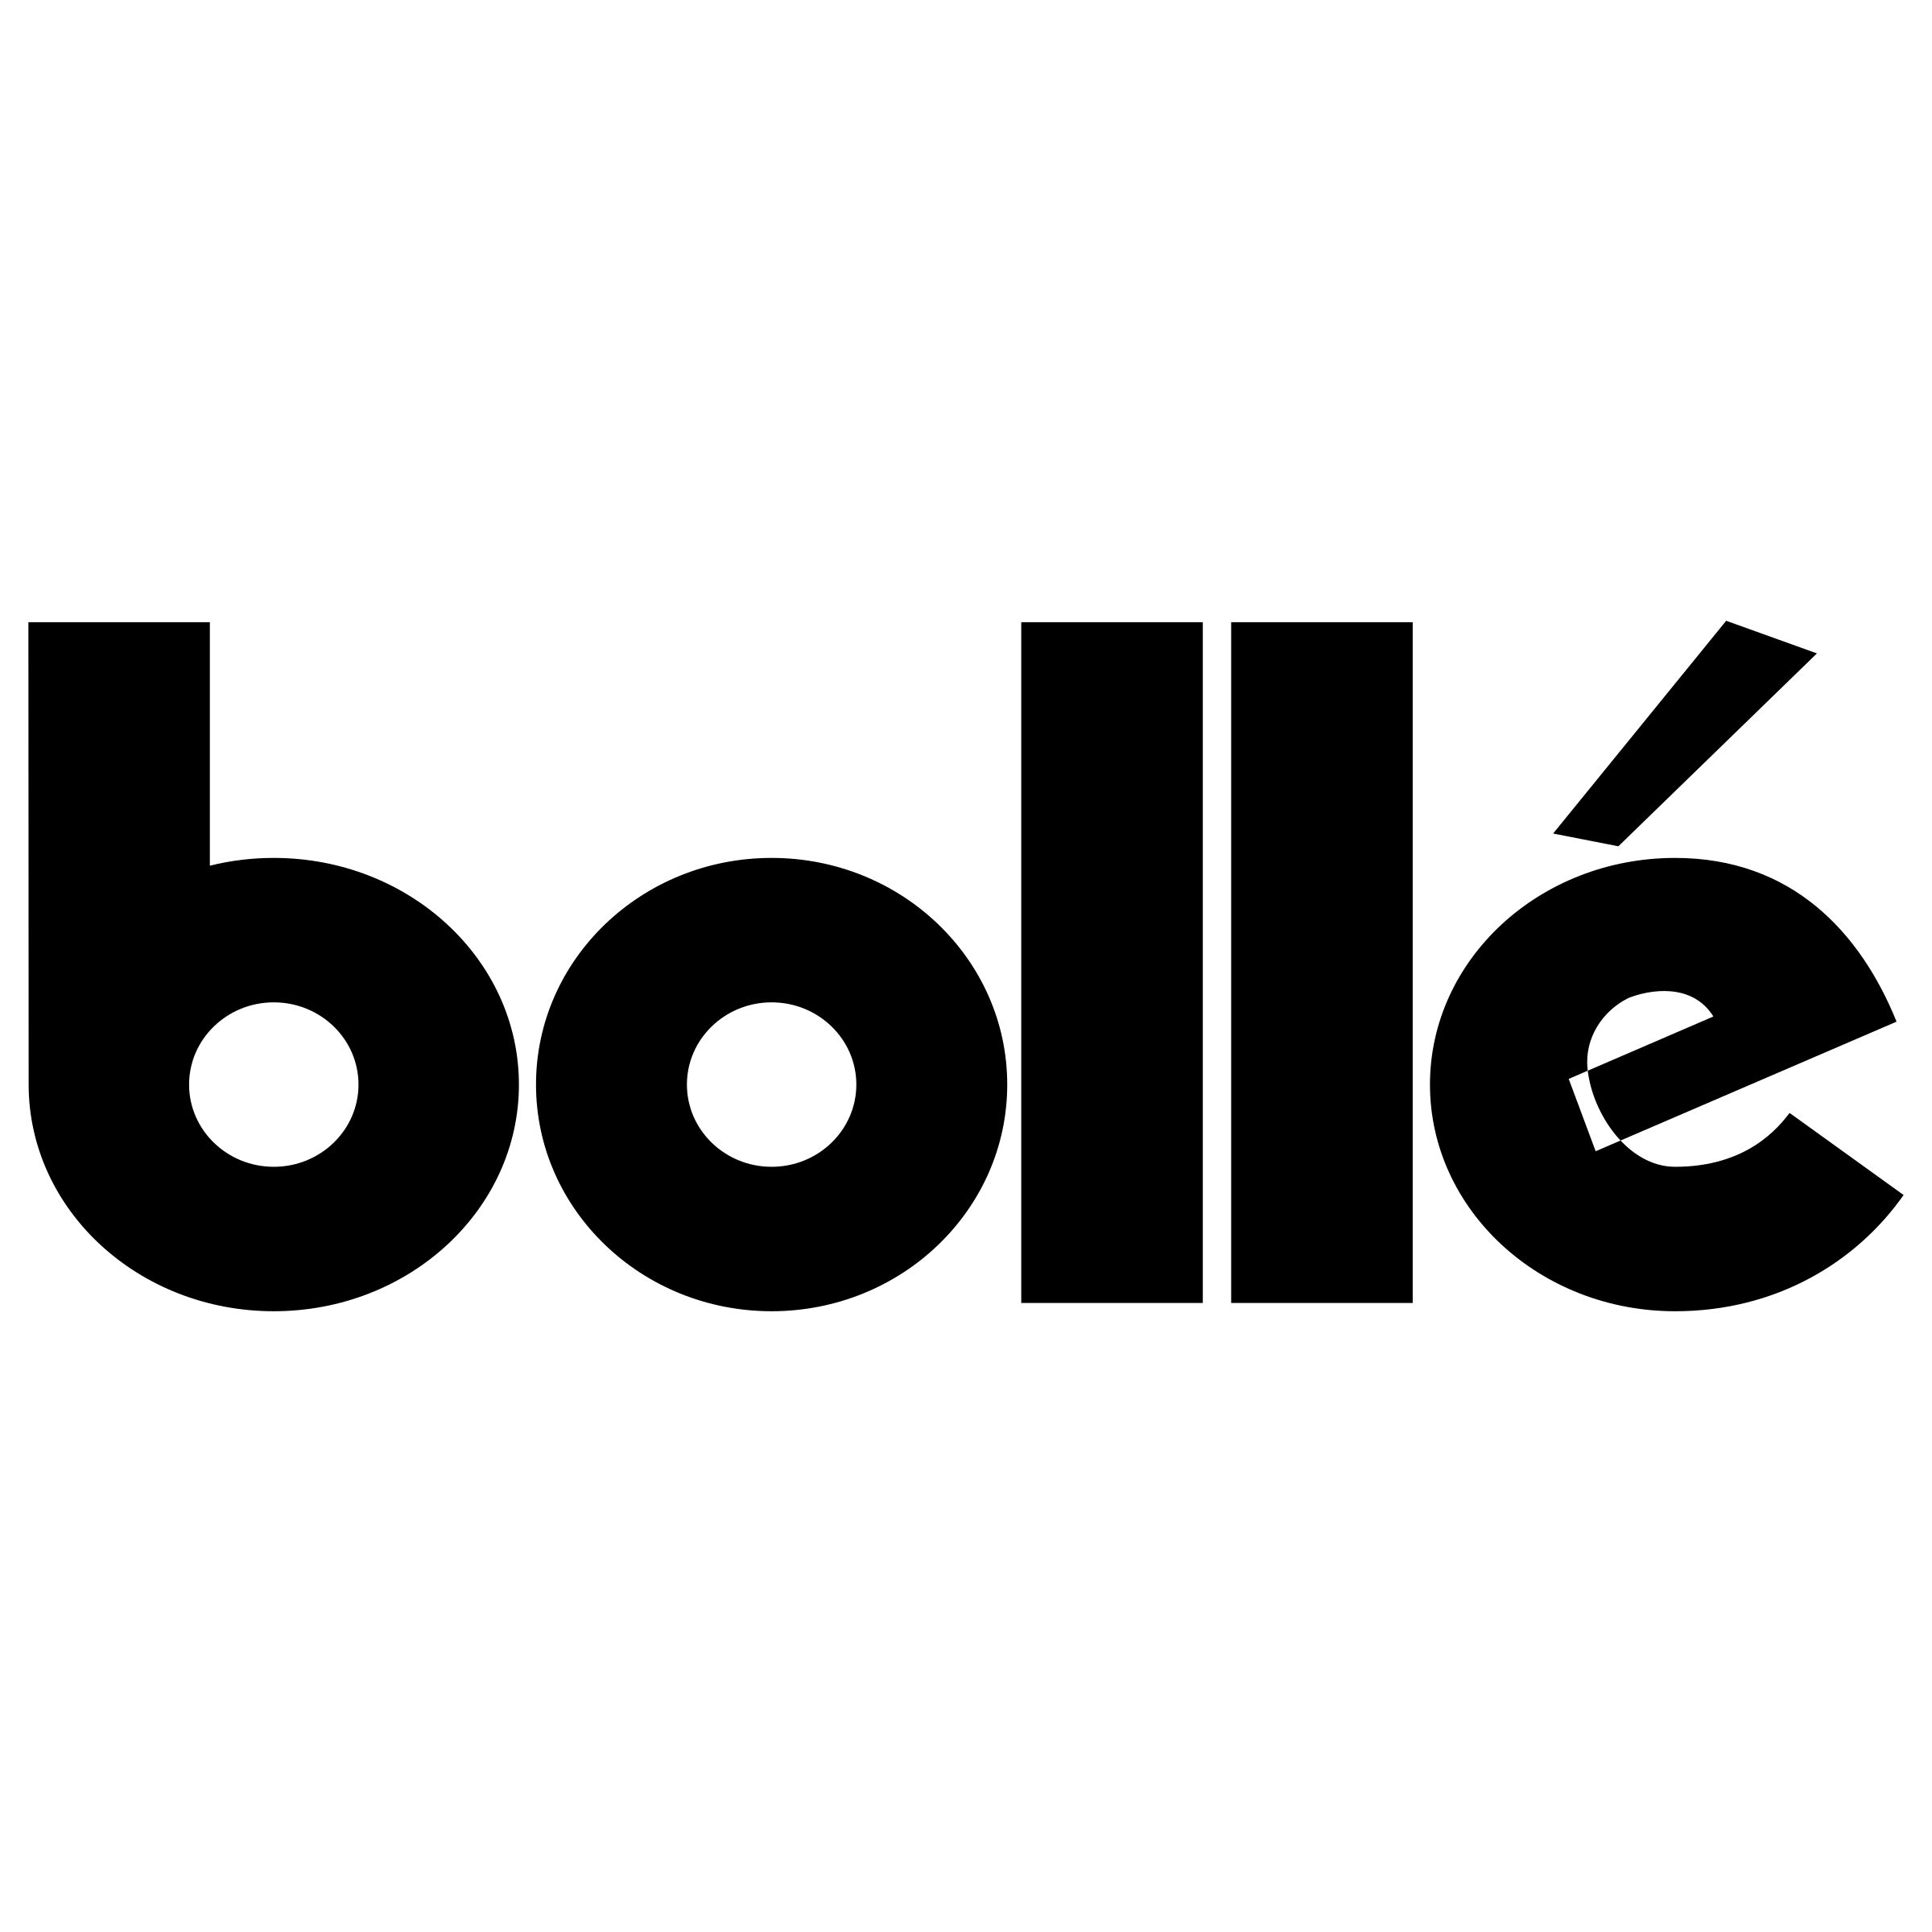 Bolle Logo - Bolle Logo PNG Transparent & SVG Vector - Freebie Supply